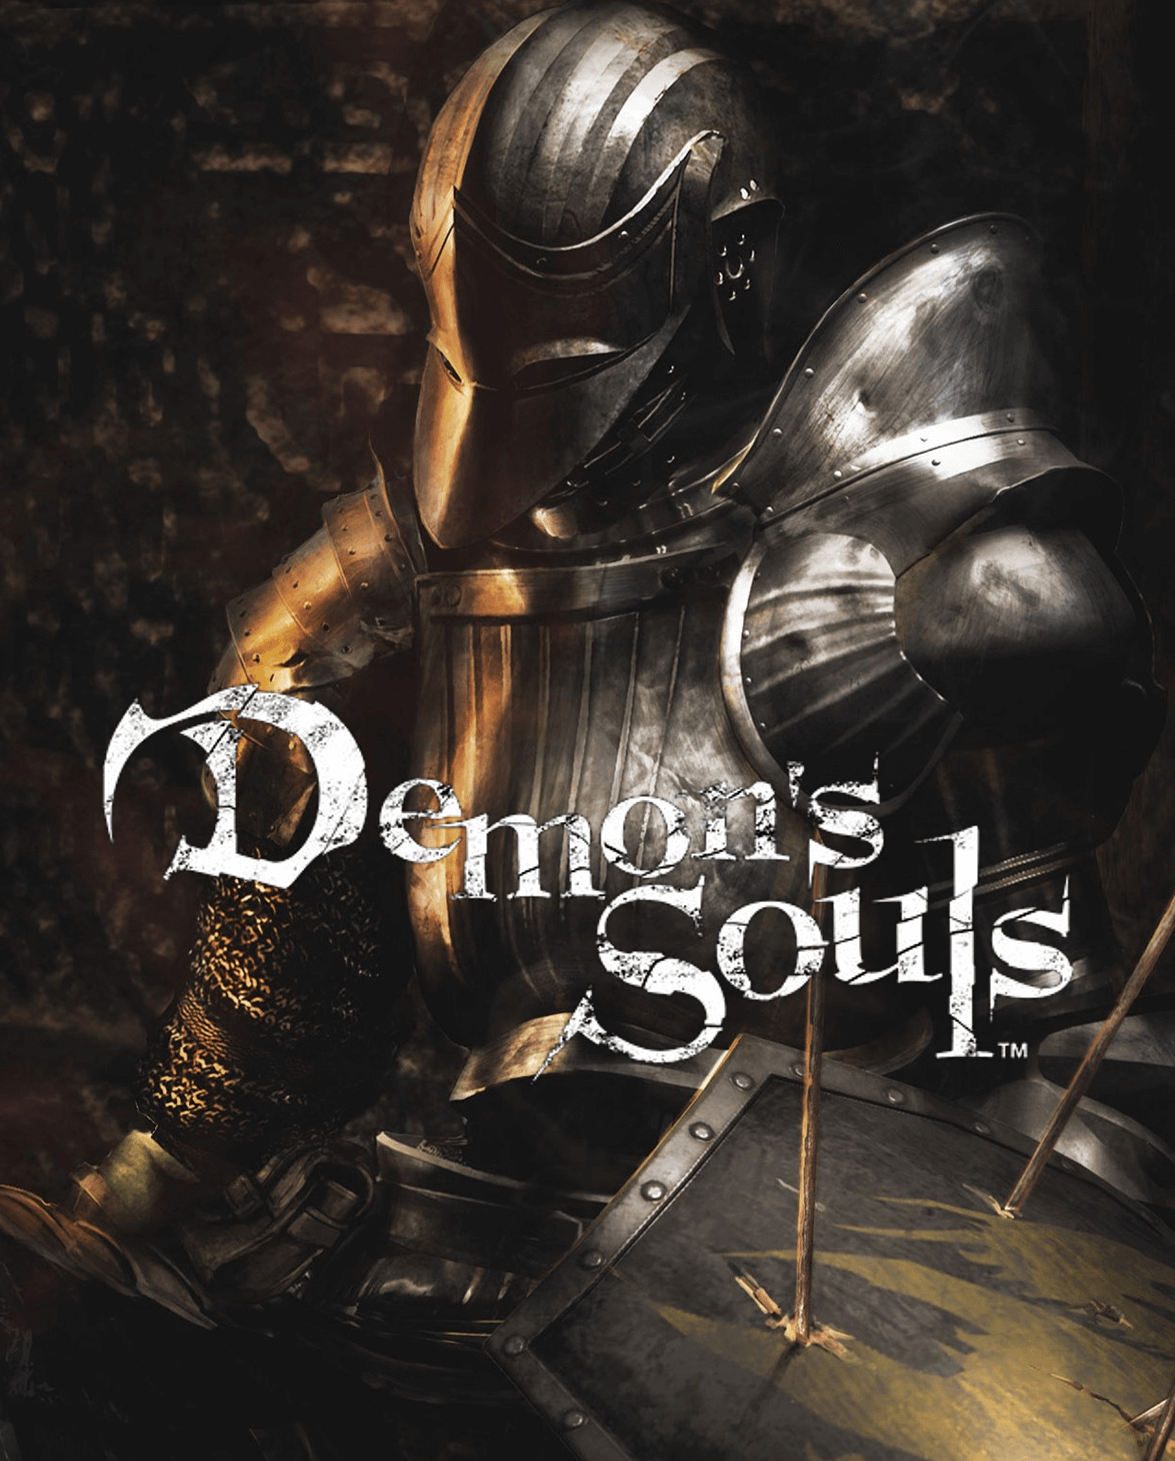 Demon's Souls для PS5